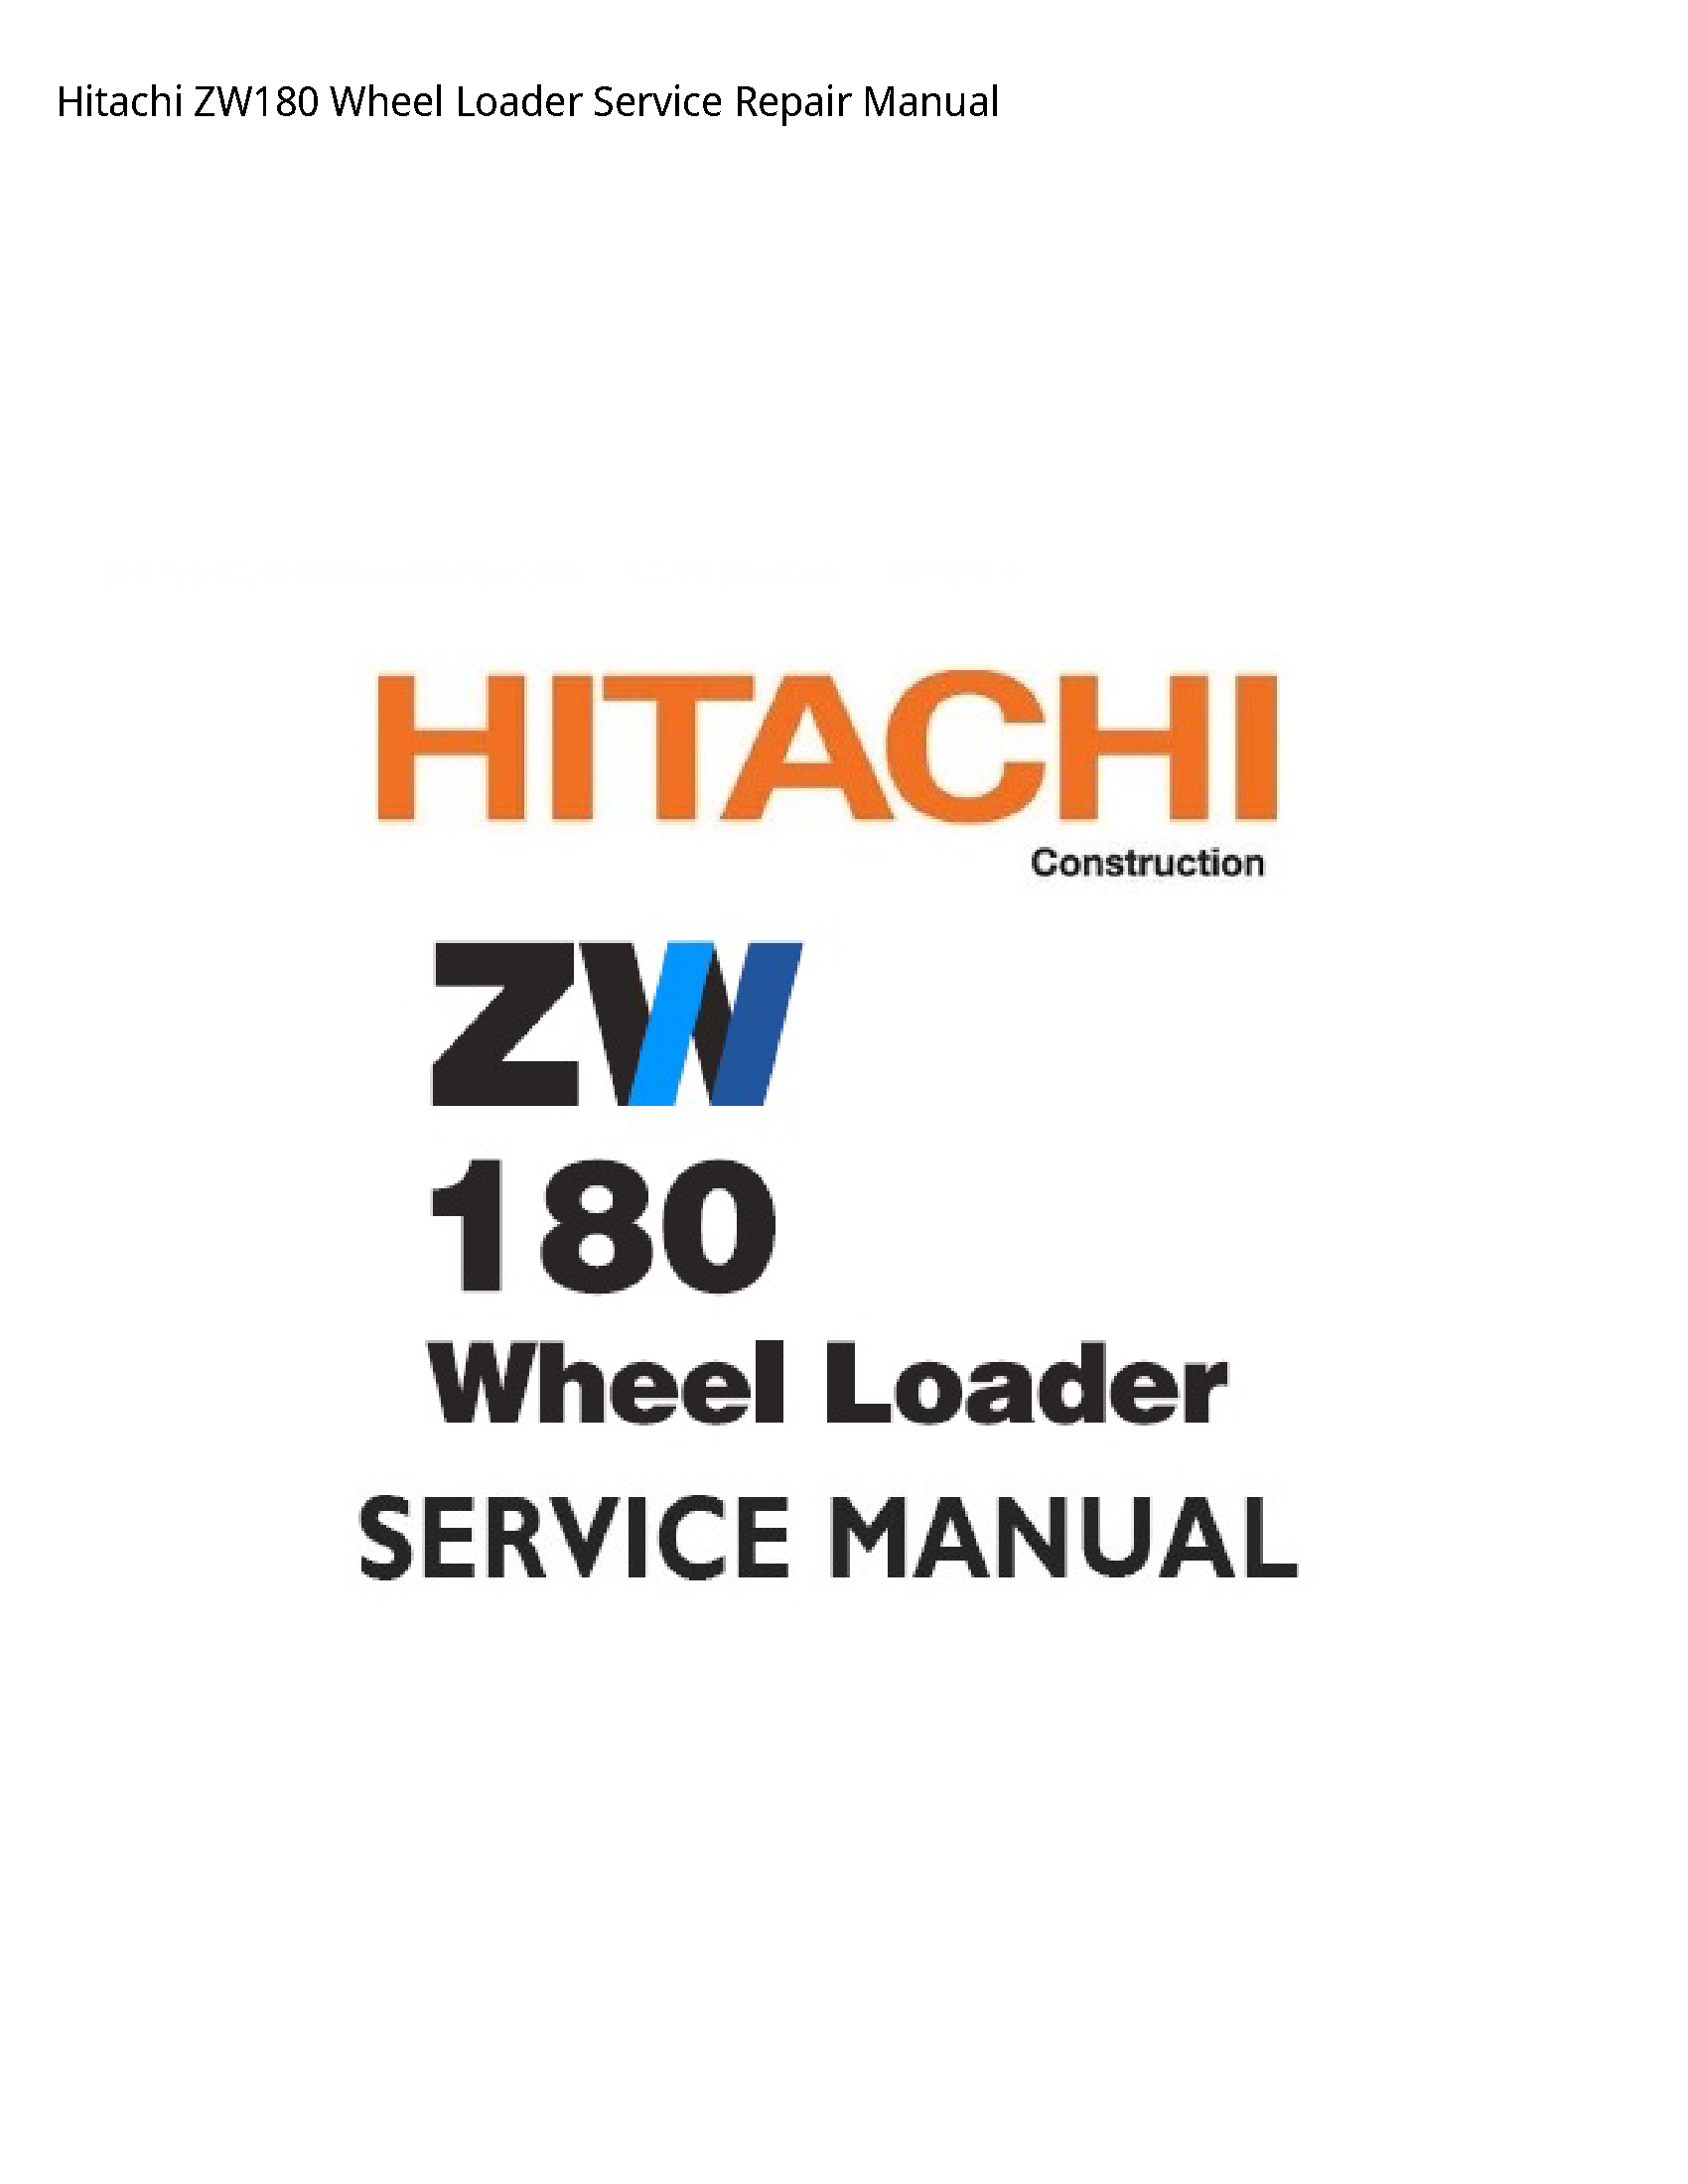 Hitachi ZW180 Wheel Loader manual